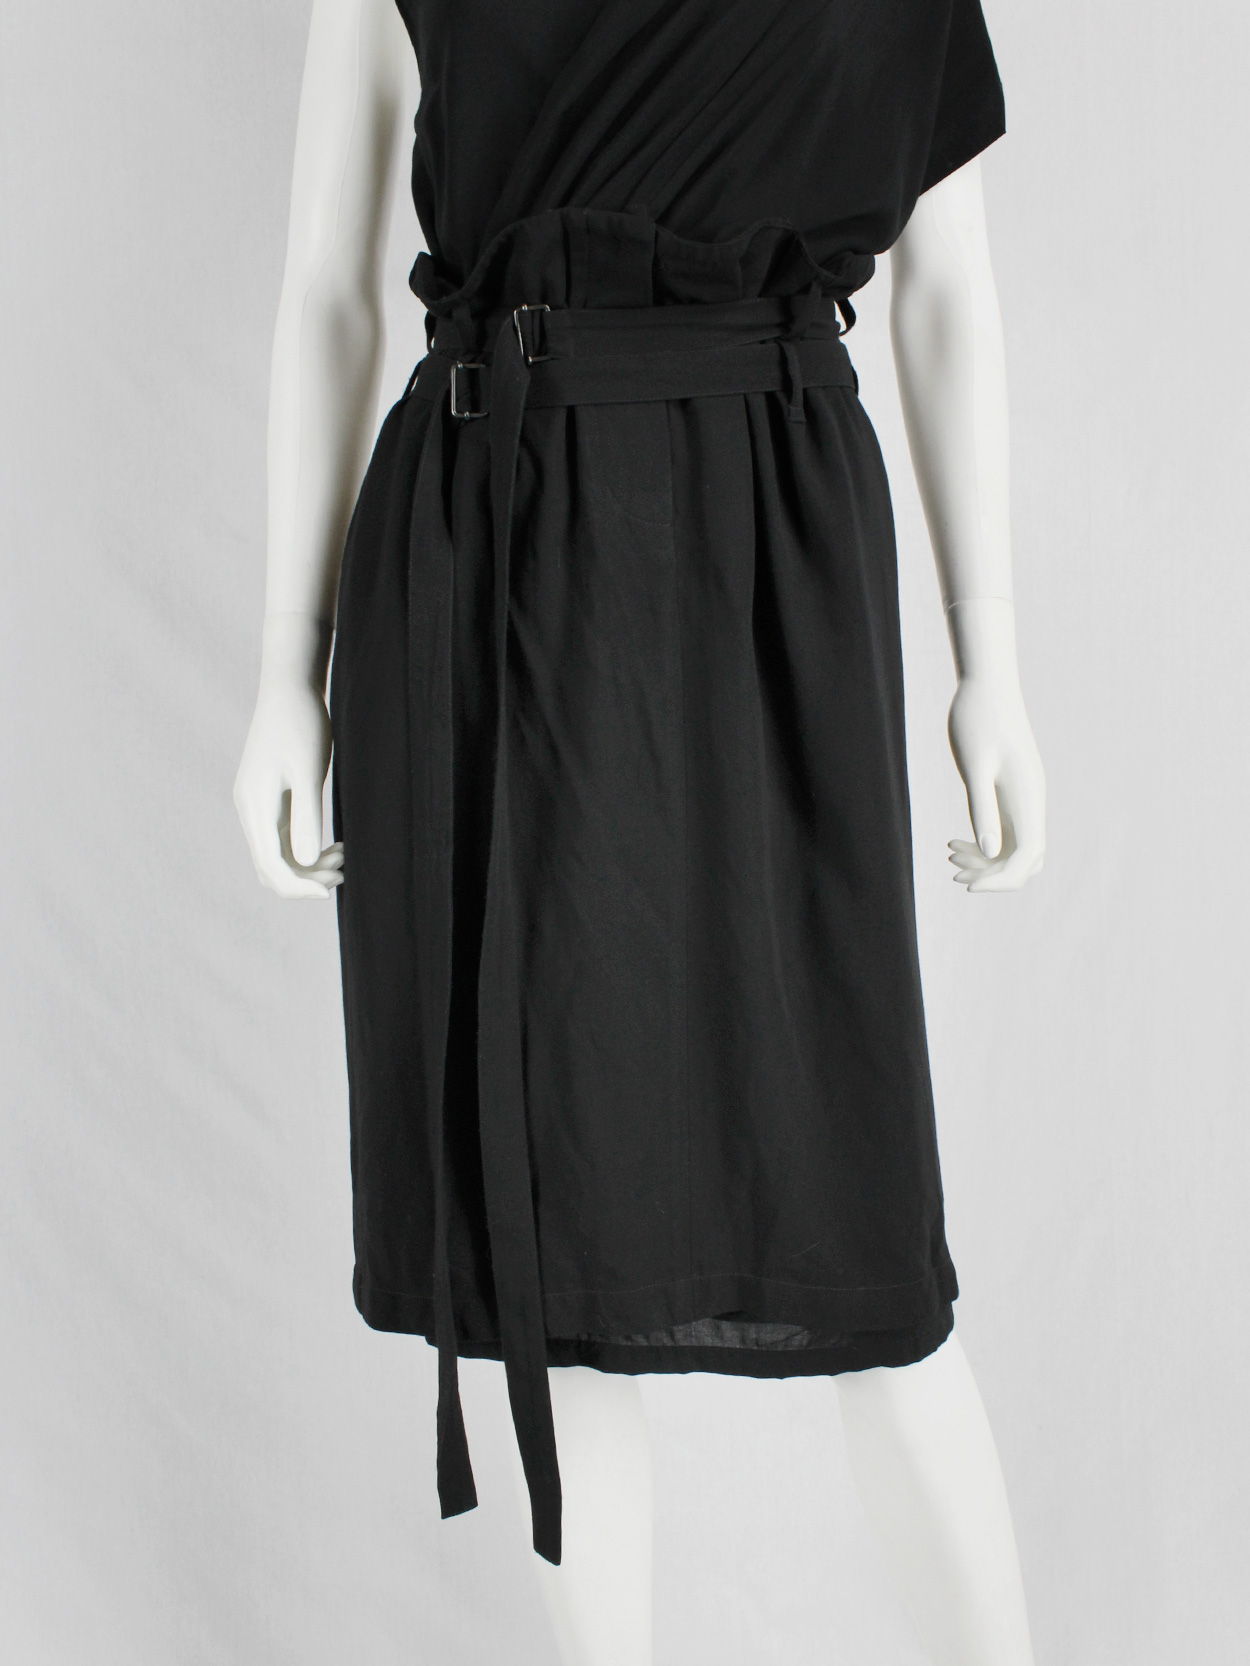 vaniitas Ann Demeulemeester black skirt with two belt straps spring 2003 6756